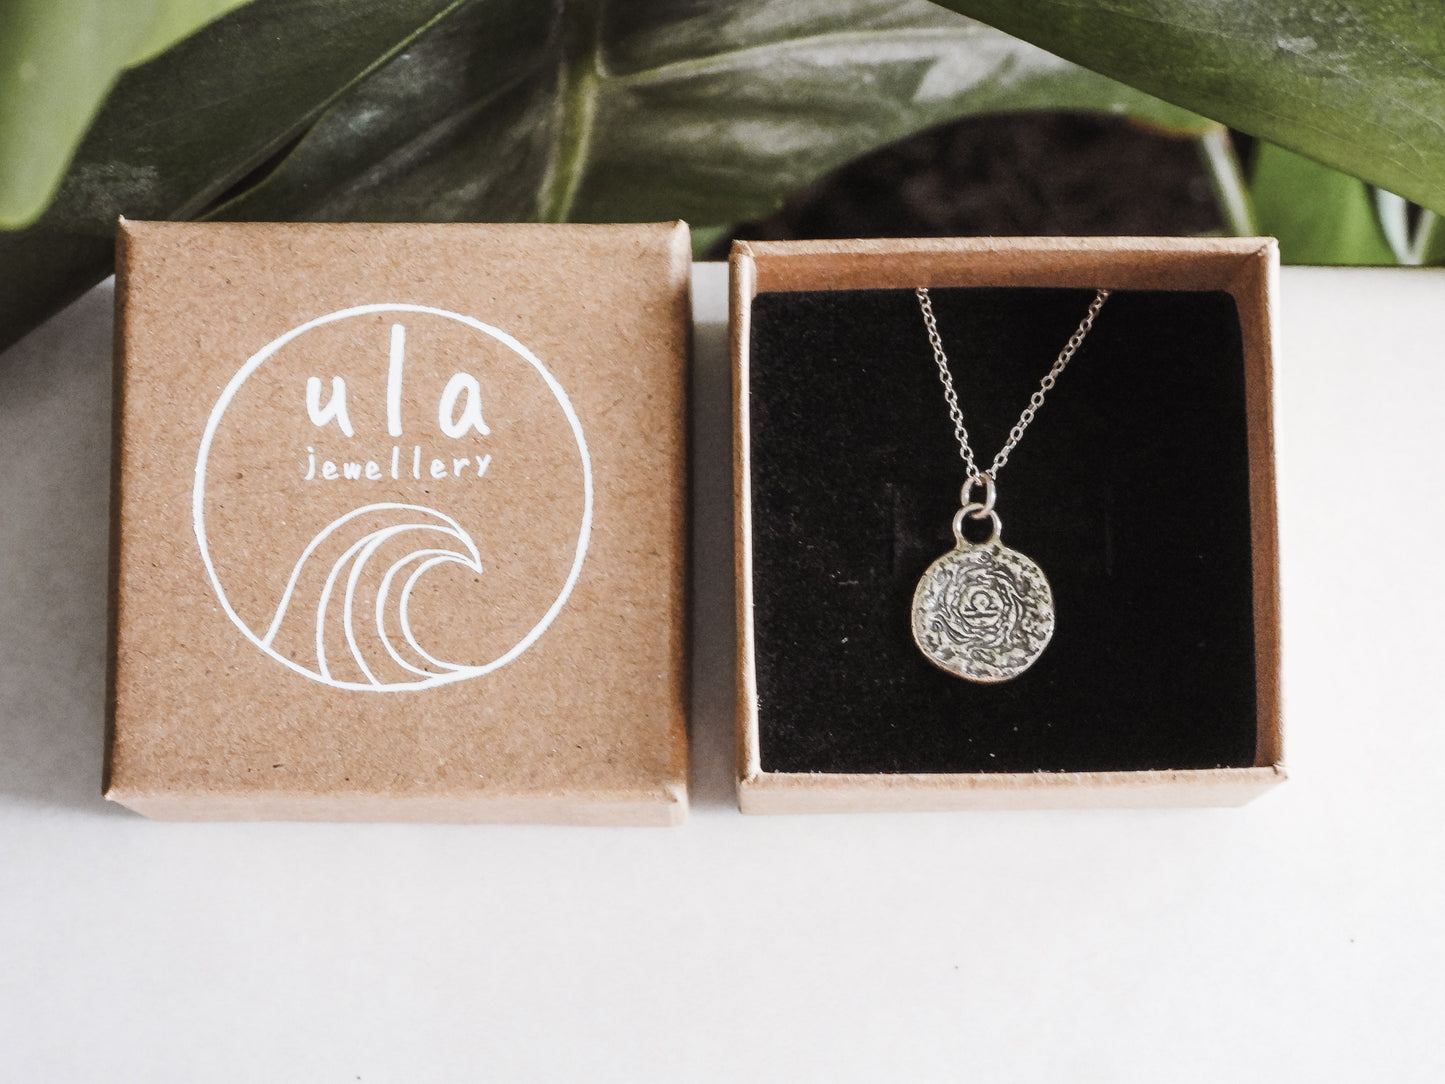 symbology necklace by ula jewellery with zodiac sign